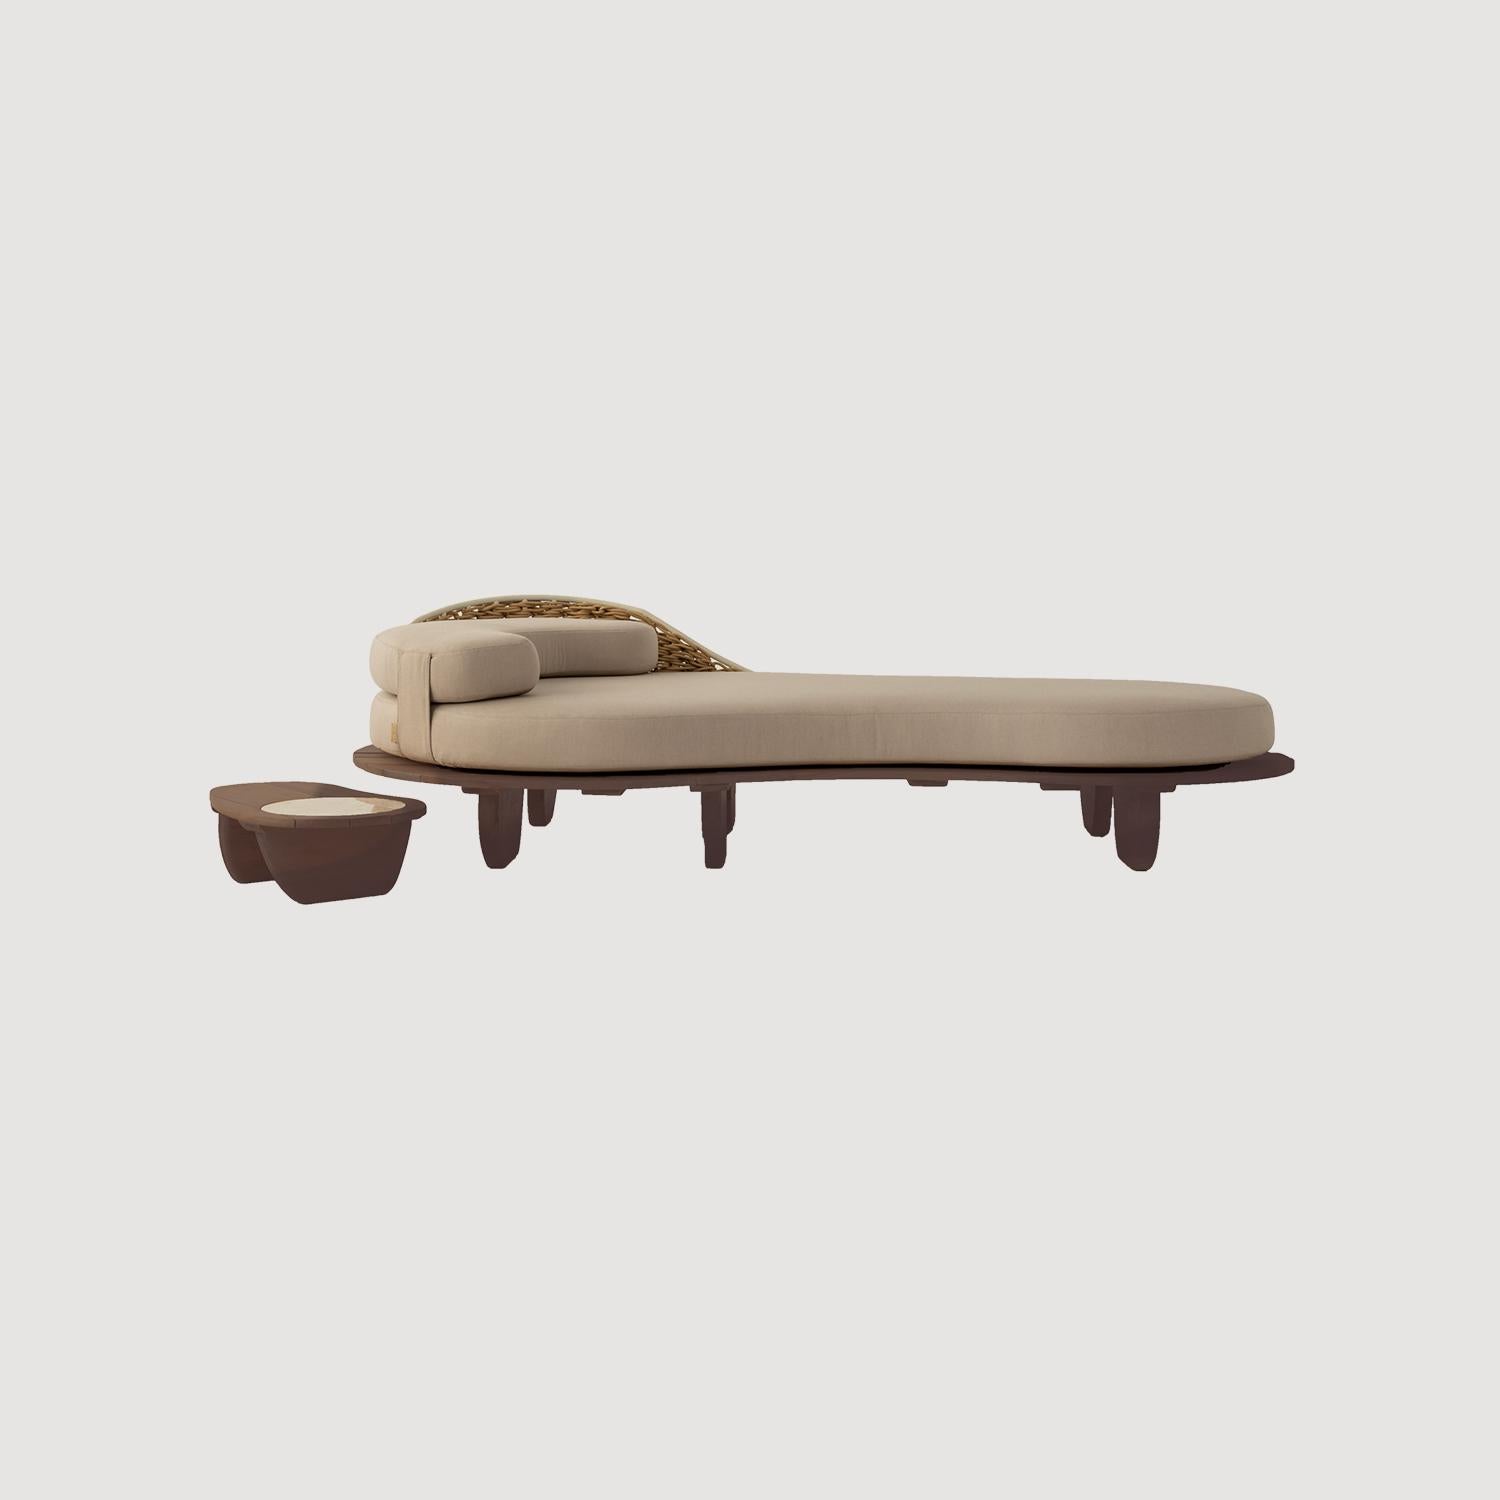 The Sayari Indoor / Outdoor Daybed Chaise and Table Kollektion von Studio Lloyd im Angebot 8